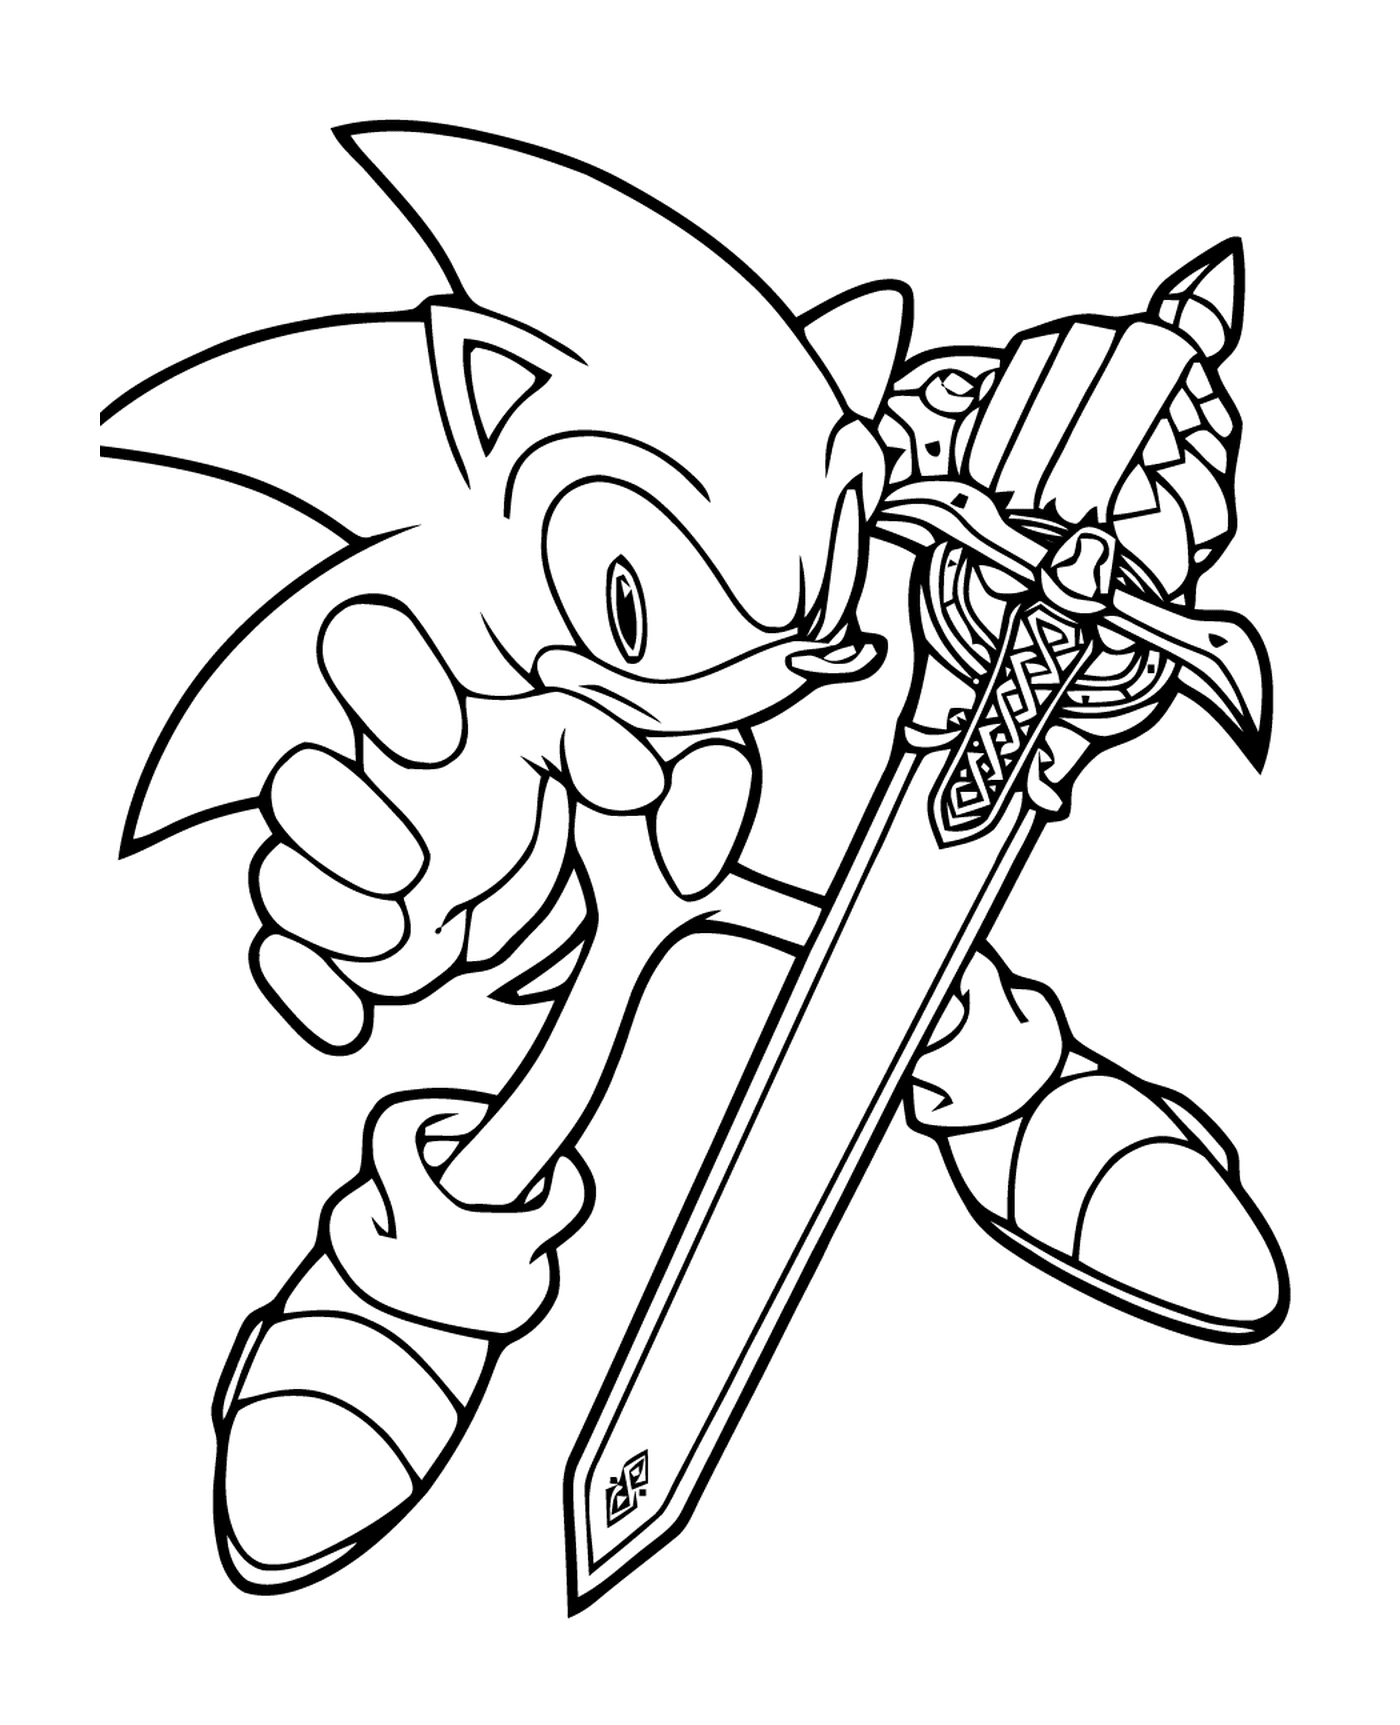  Super Sonic powerful sword 